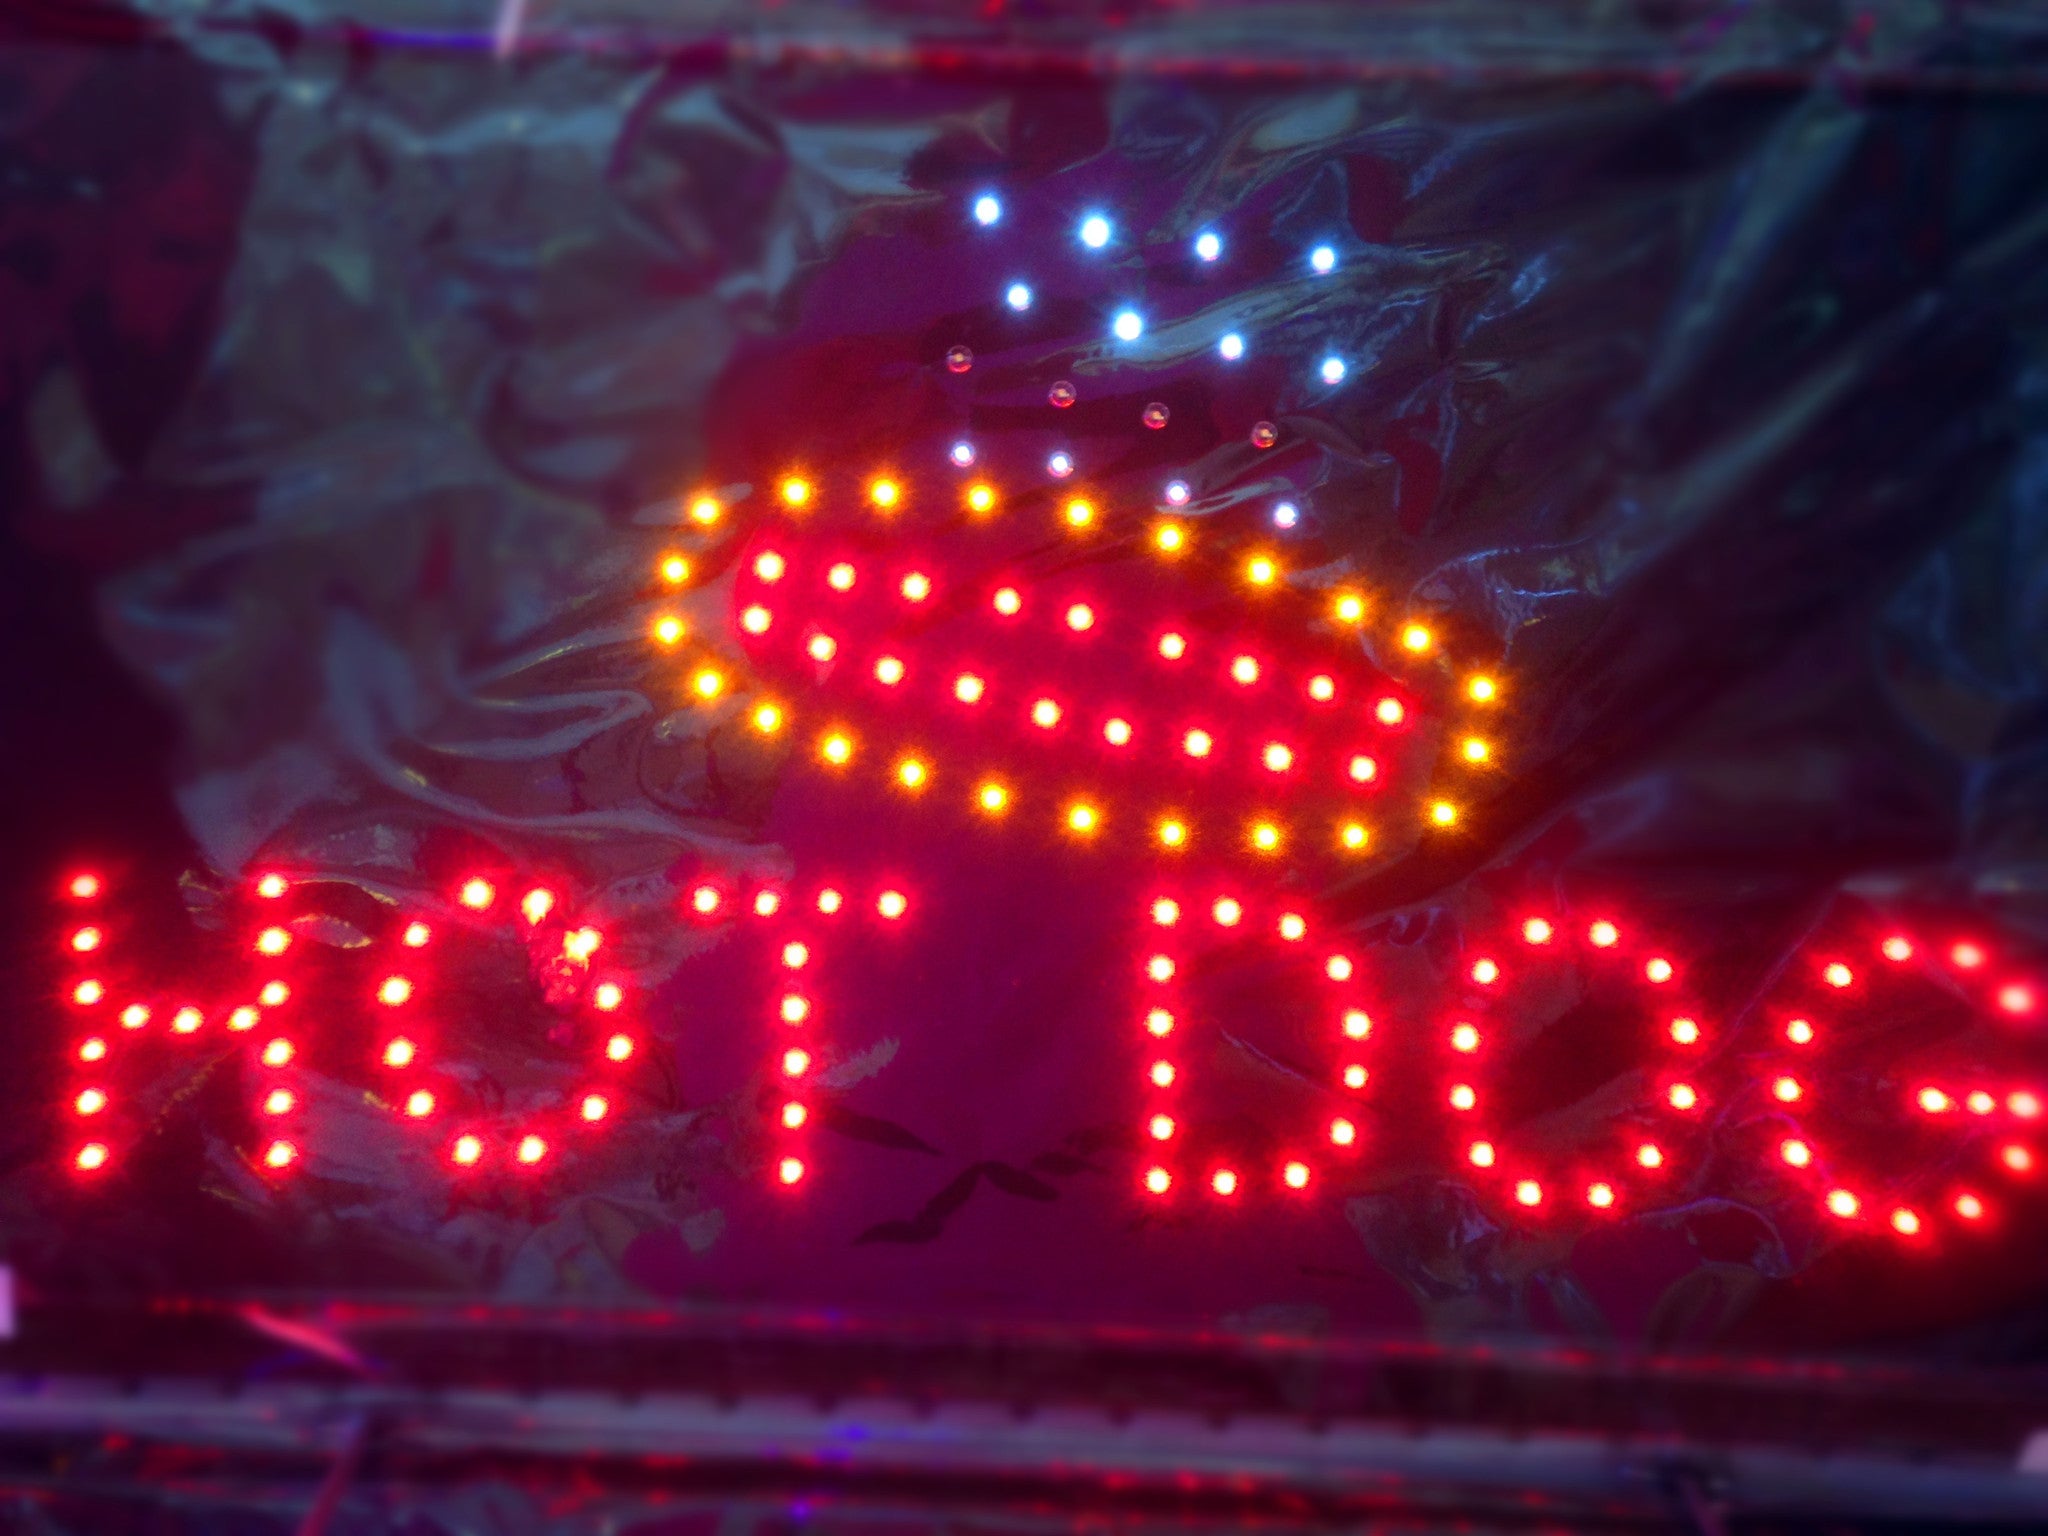 "HOT DOG" LED Sign 55cmx33cm